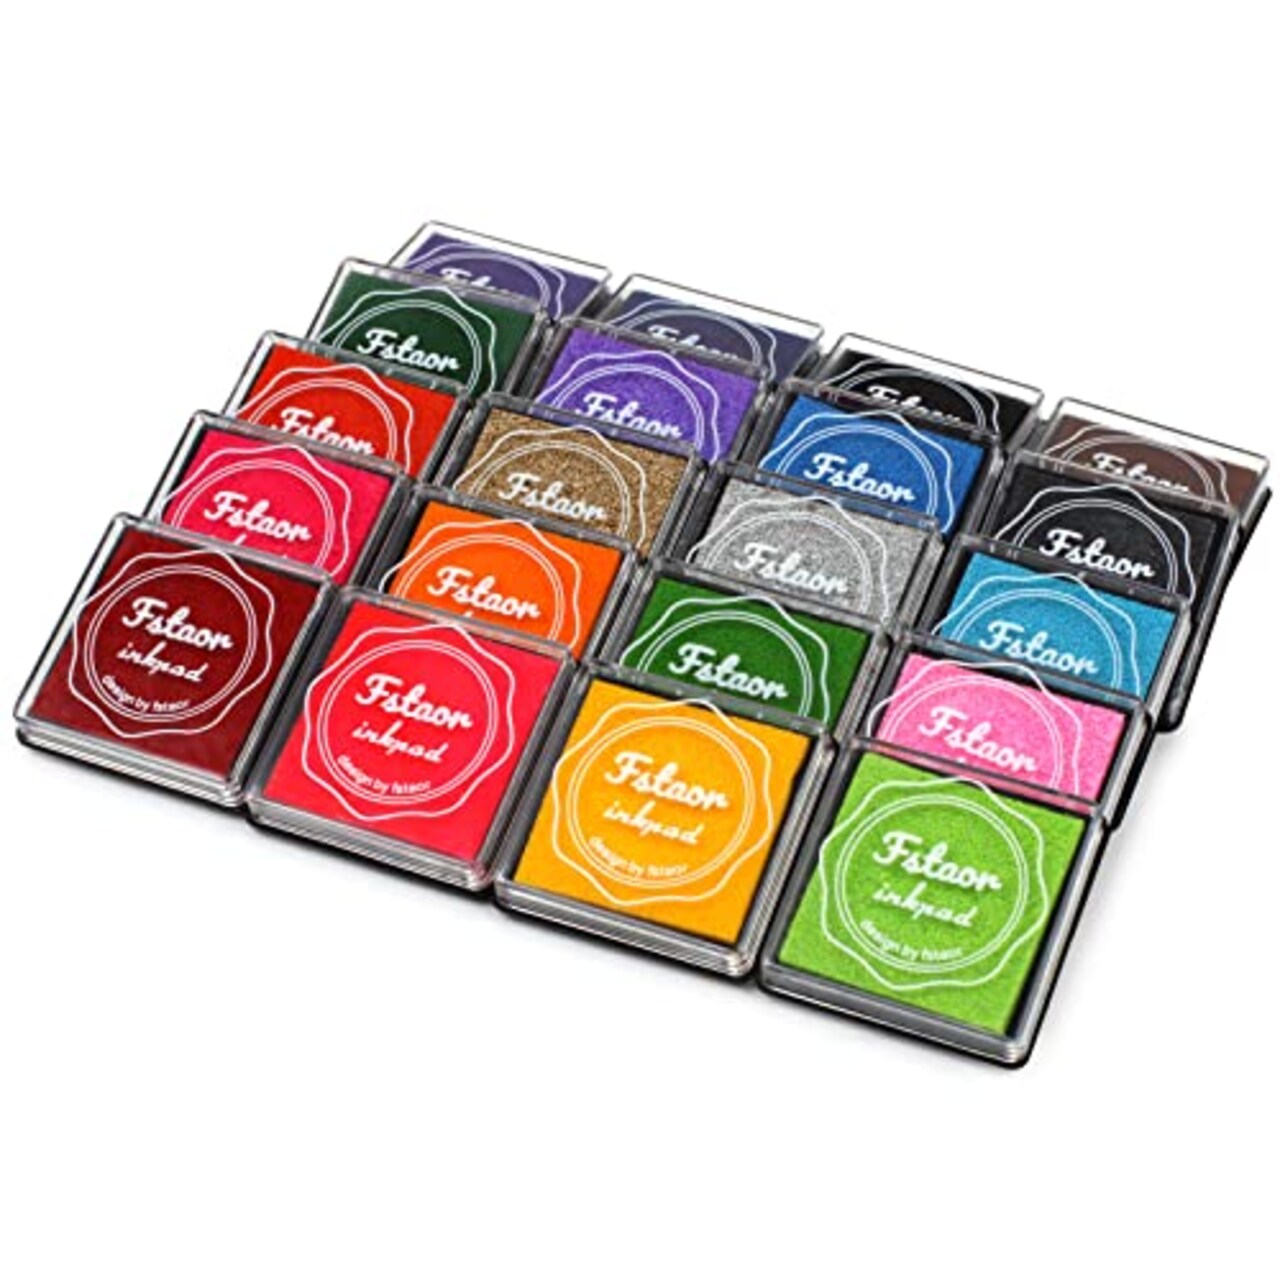 Fstaor 20 Colors Washable Ink Pads for Kids Rubber Stamps, Finger